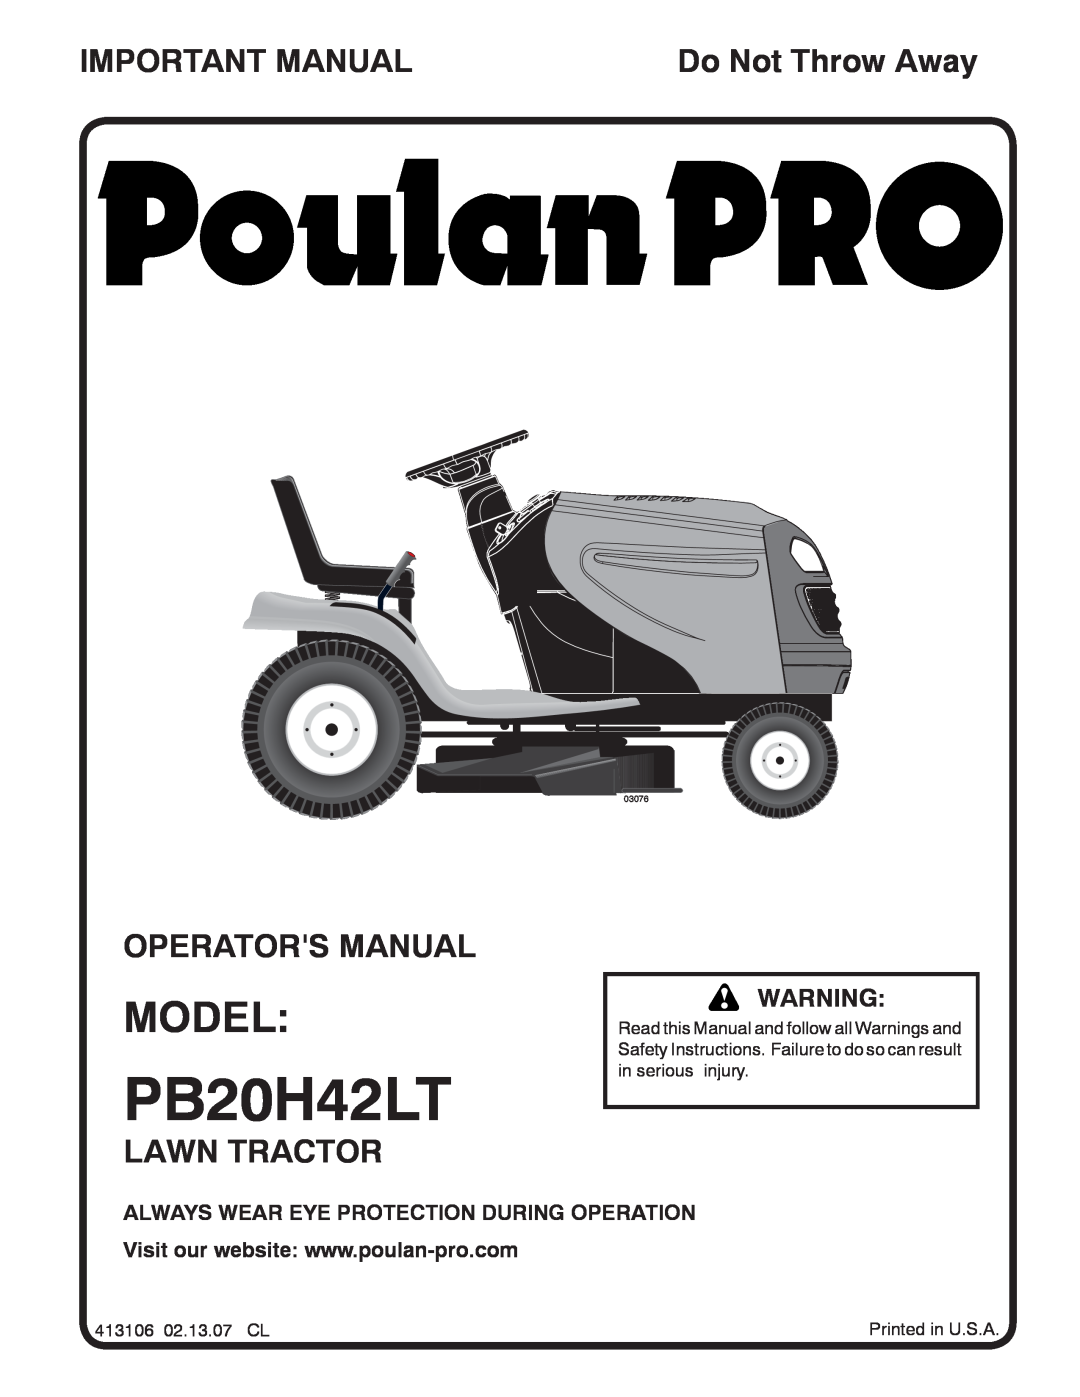 Poulan 96042005000 manual Model, Important Manual, Operators Manual, Lawn Tractor, PB20H42LT, Do Not Throw Away, 03076 